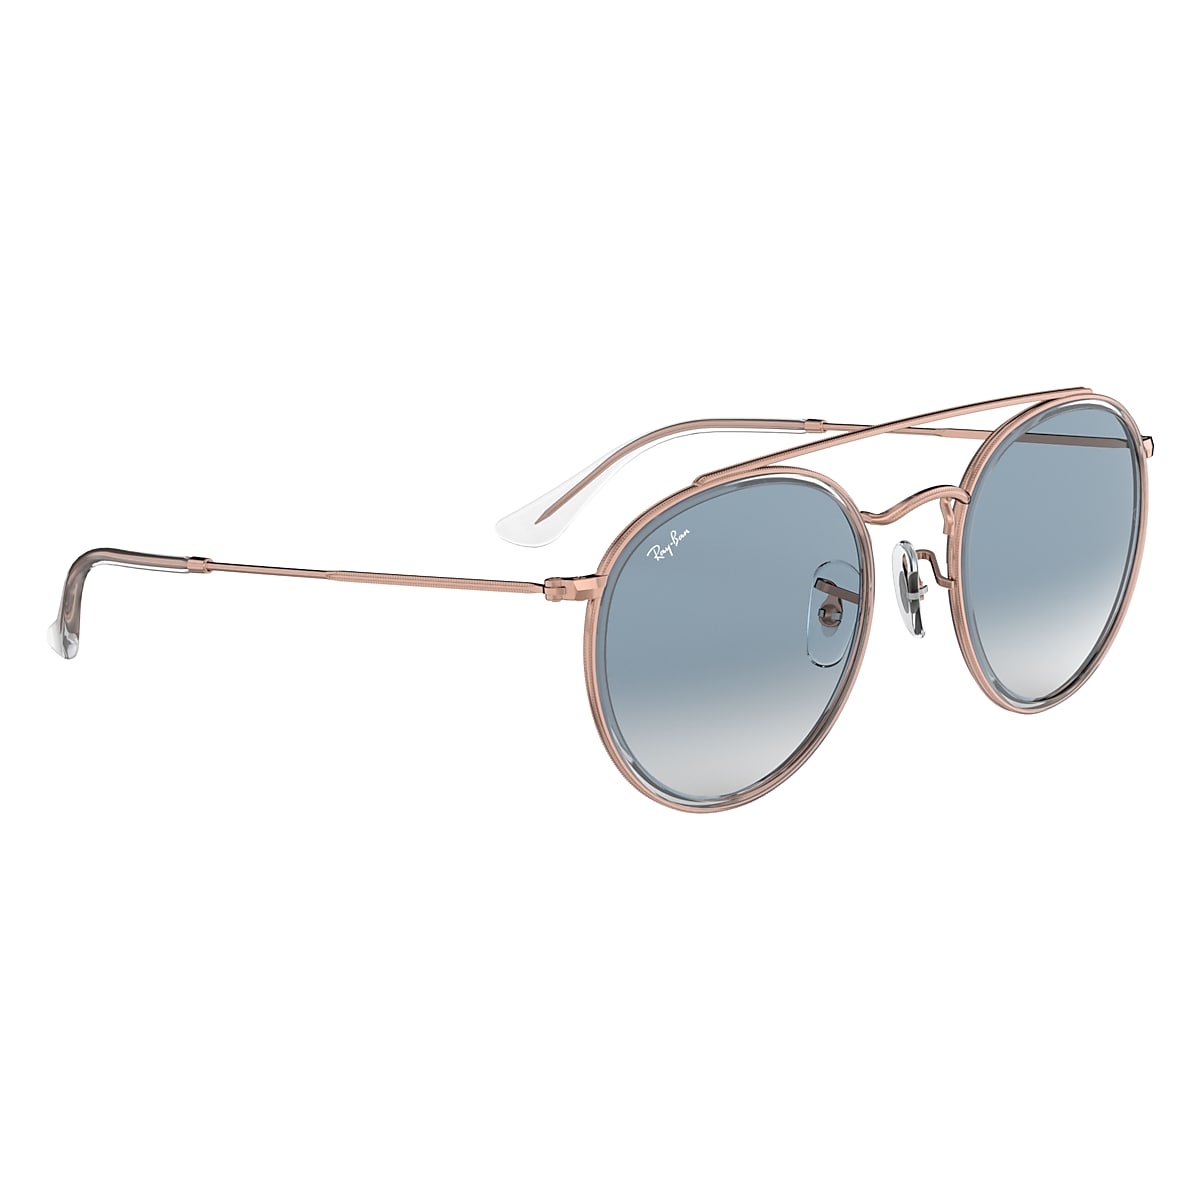 Ray-Ban Sunglasses Round Double Bridge Bronze-copper Frame Blue Lenses